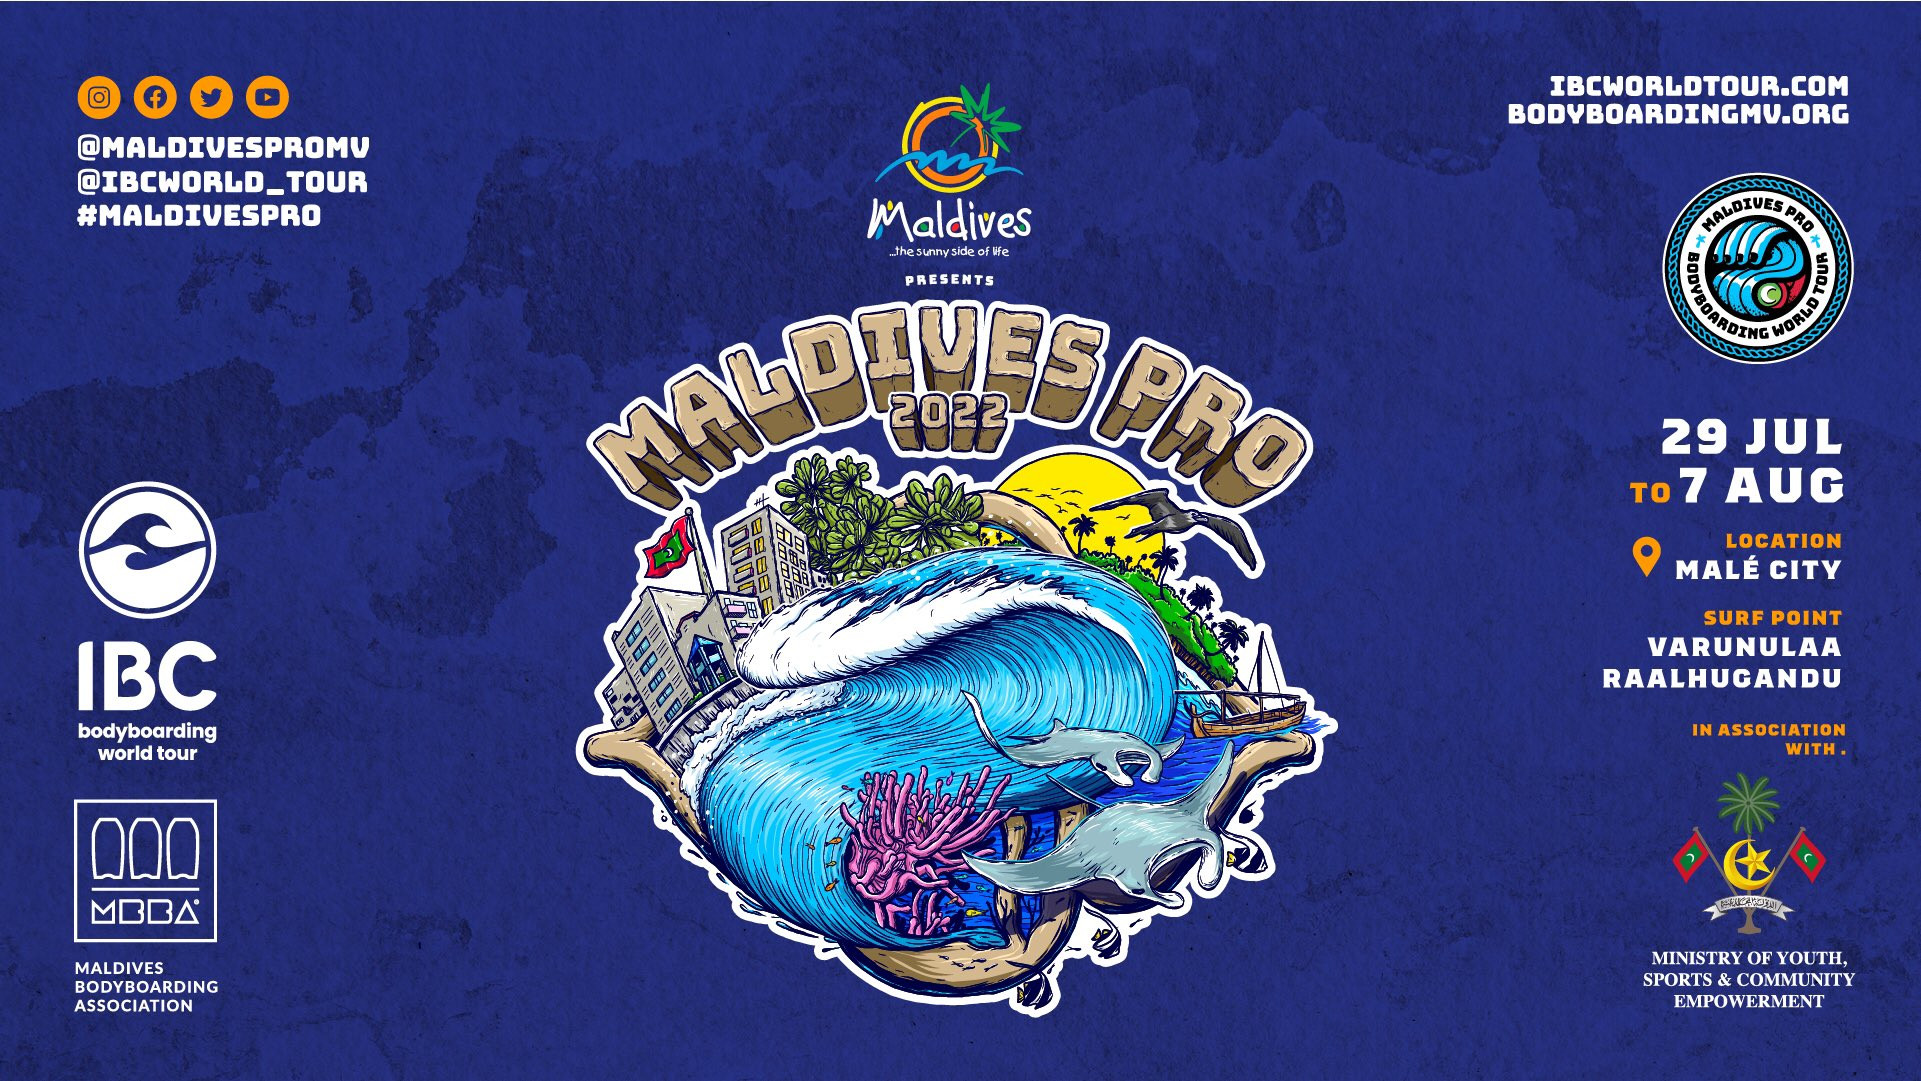 Visit Maldives Pro 2022 - First International Bodyboarding World Tour Event in the Maldives